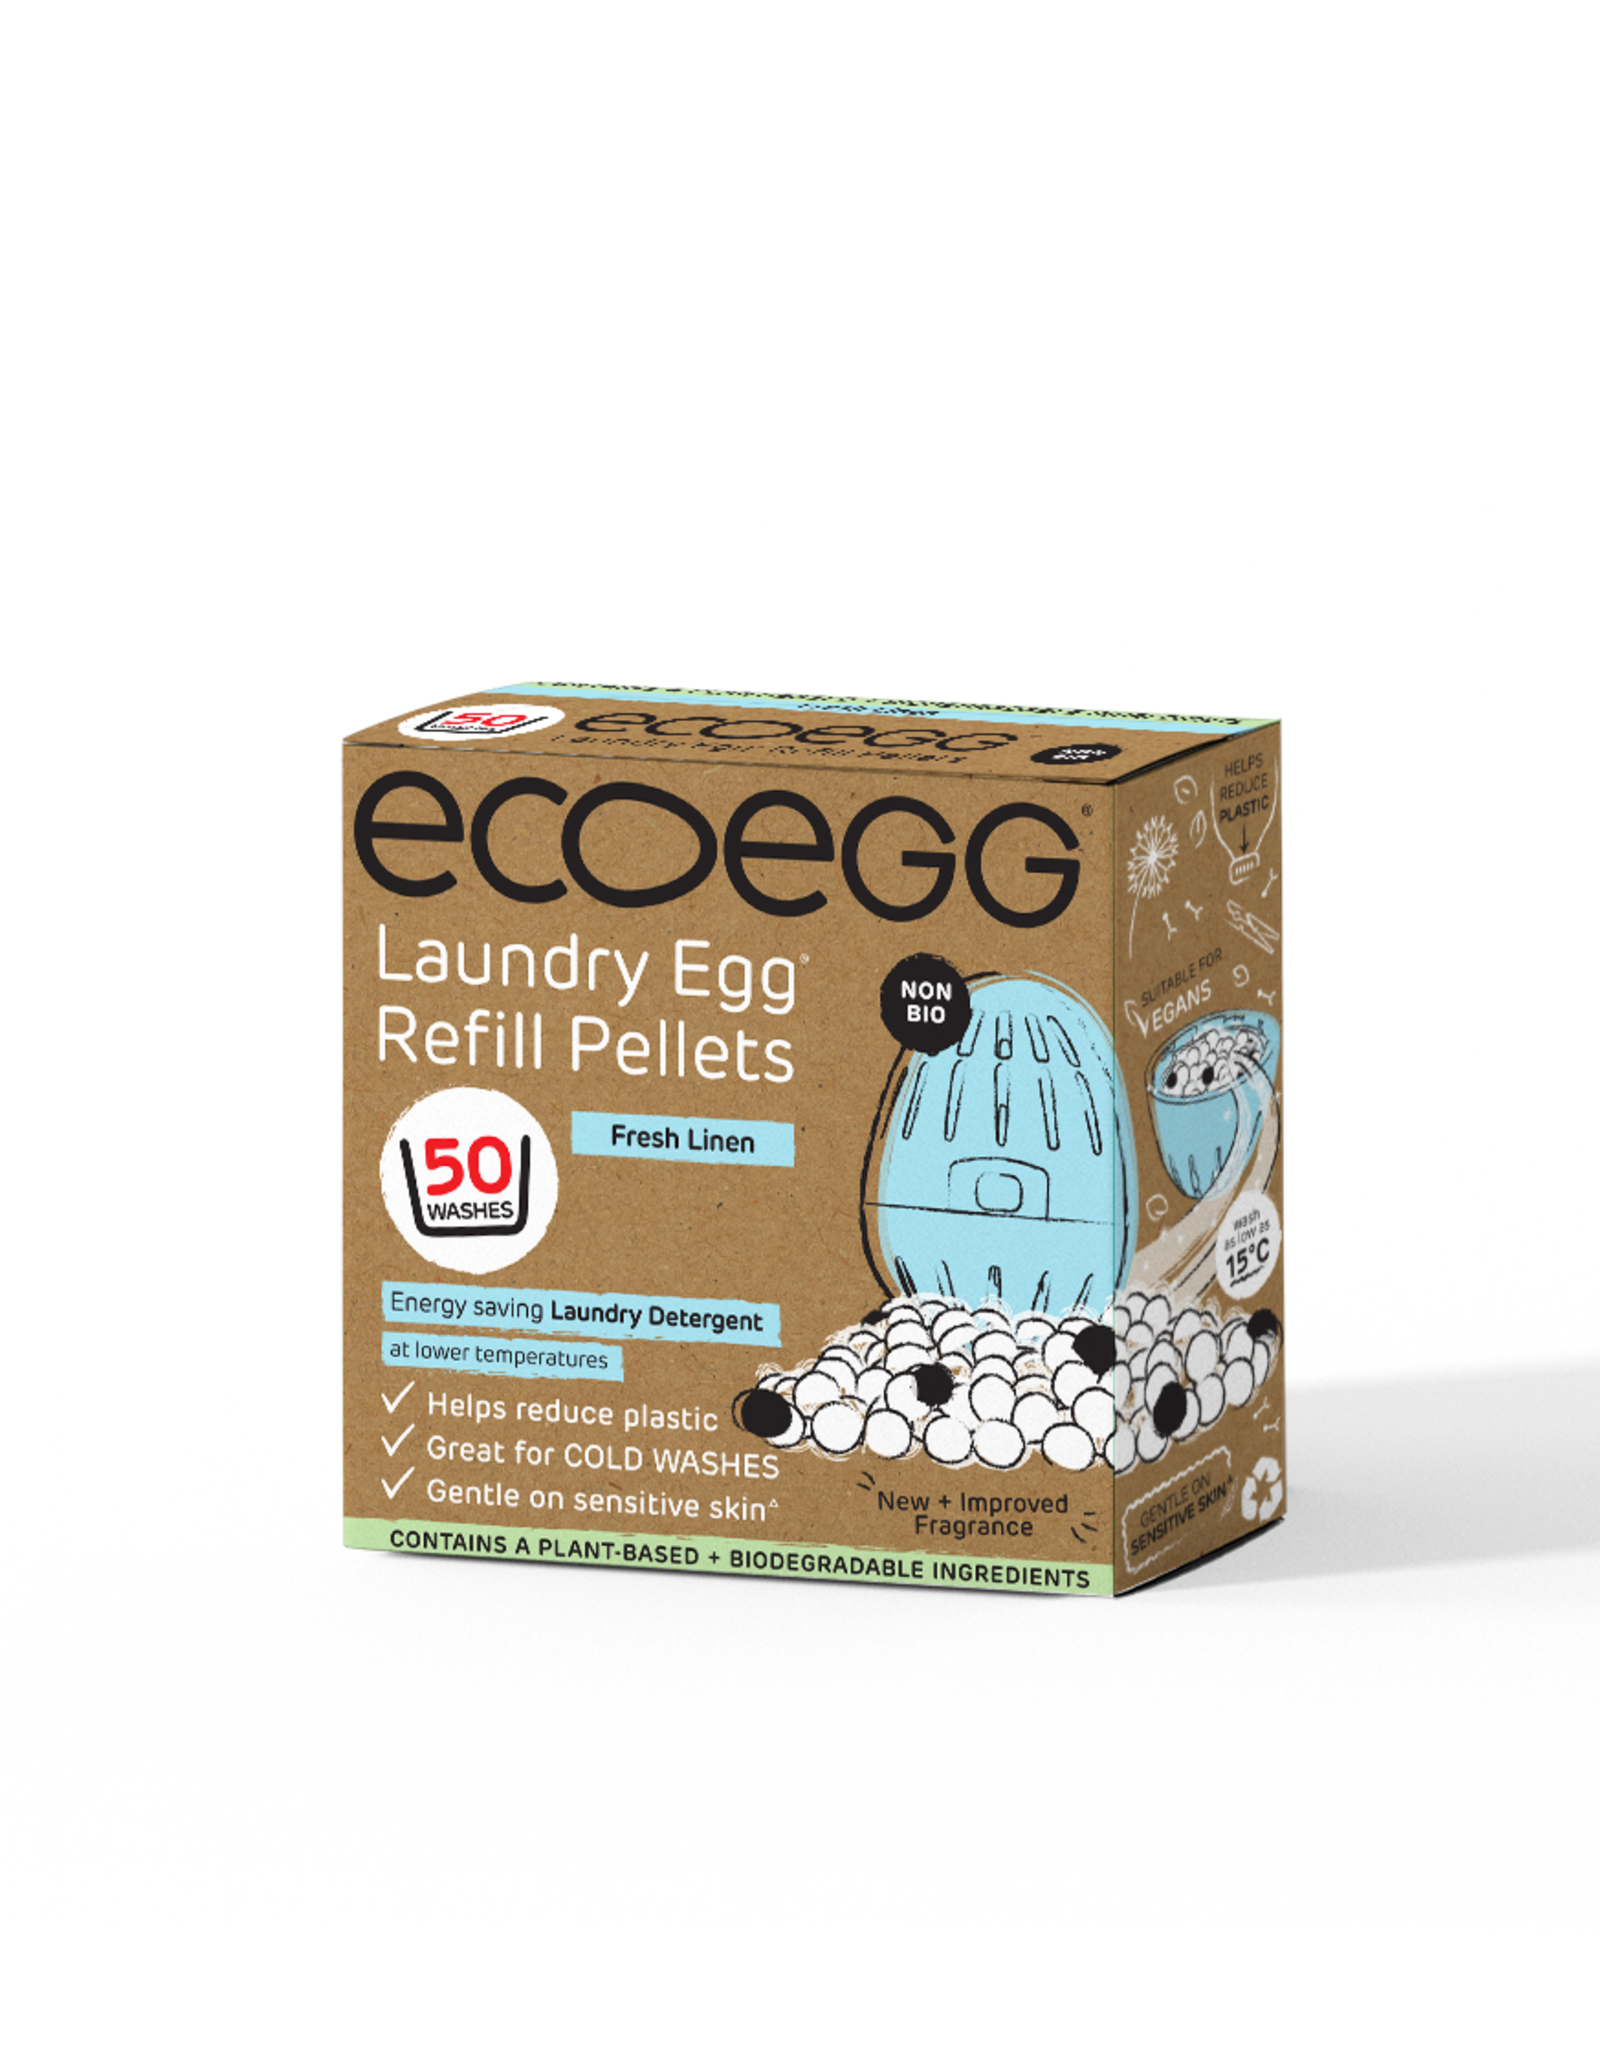 Ecoegg Ecoegg Laundry Egg Fresh Linen - 50 washes - refill